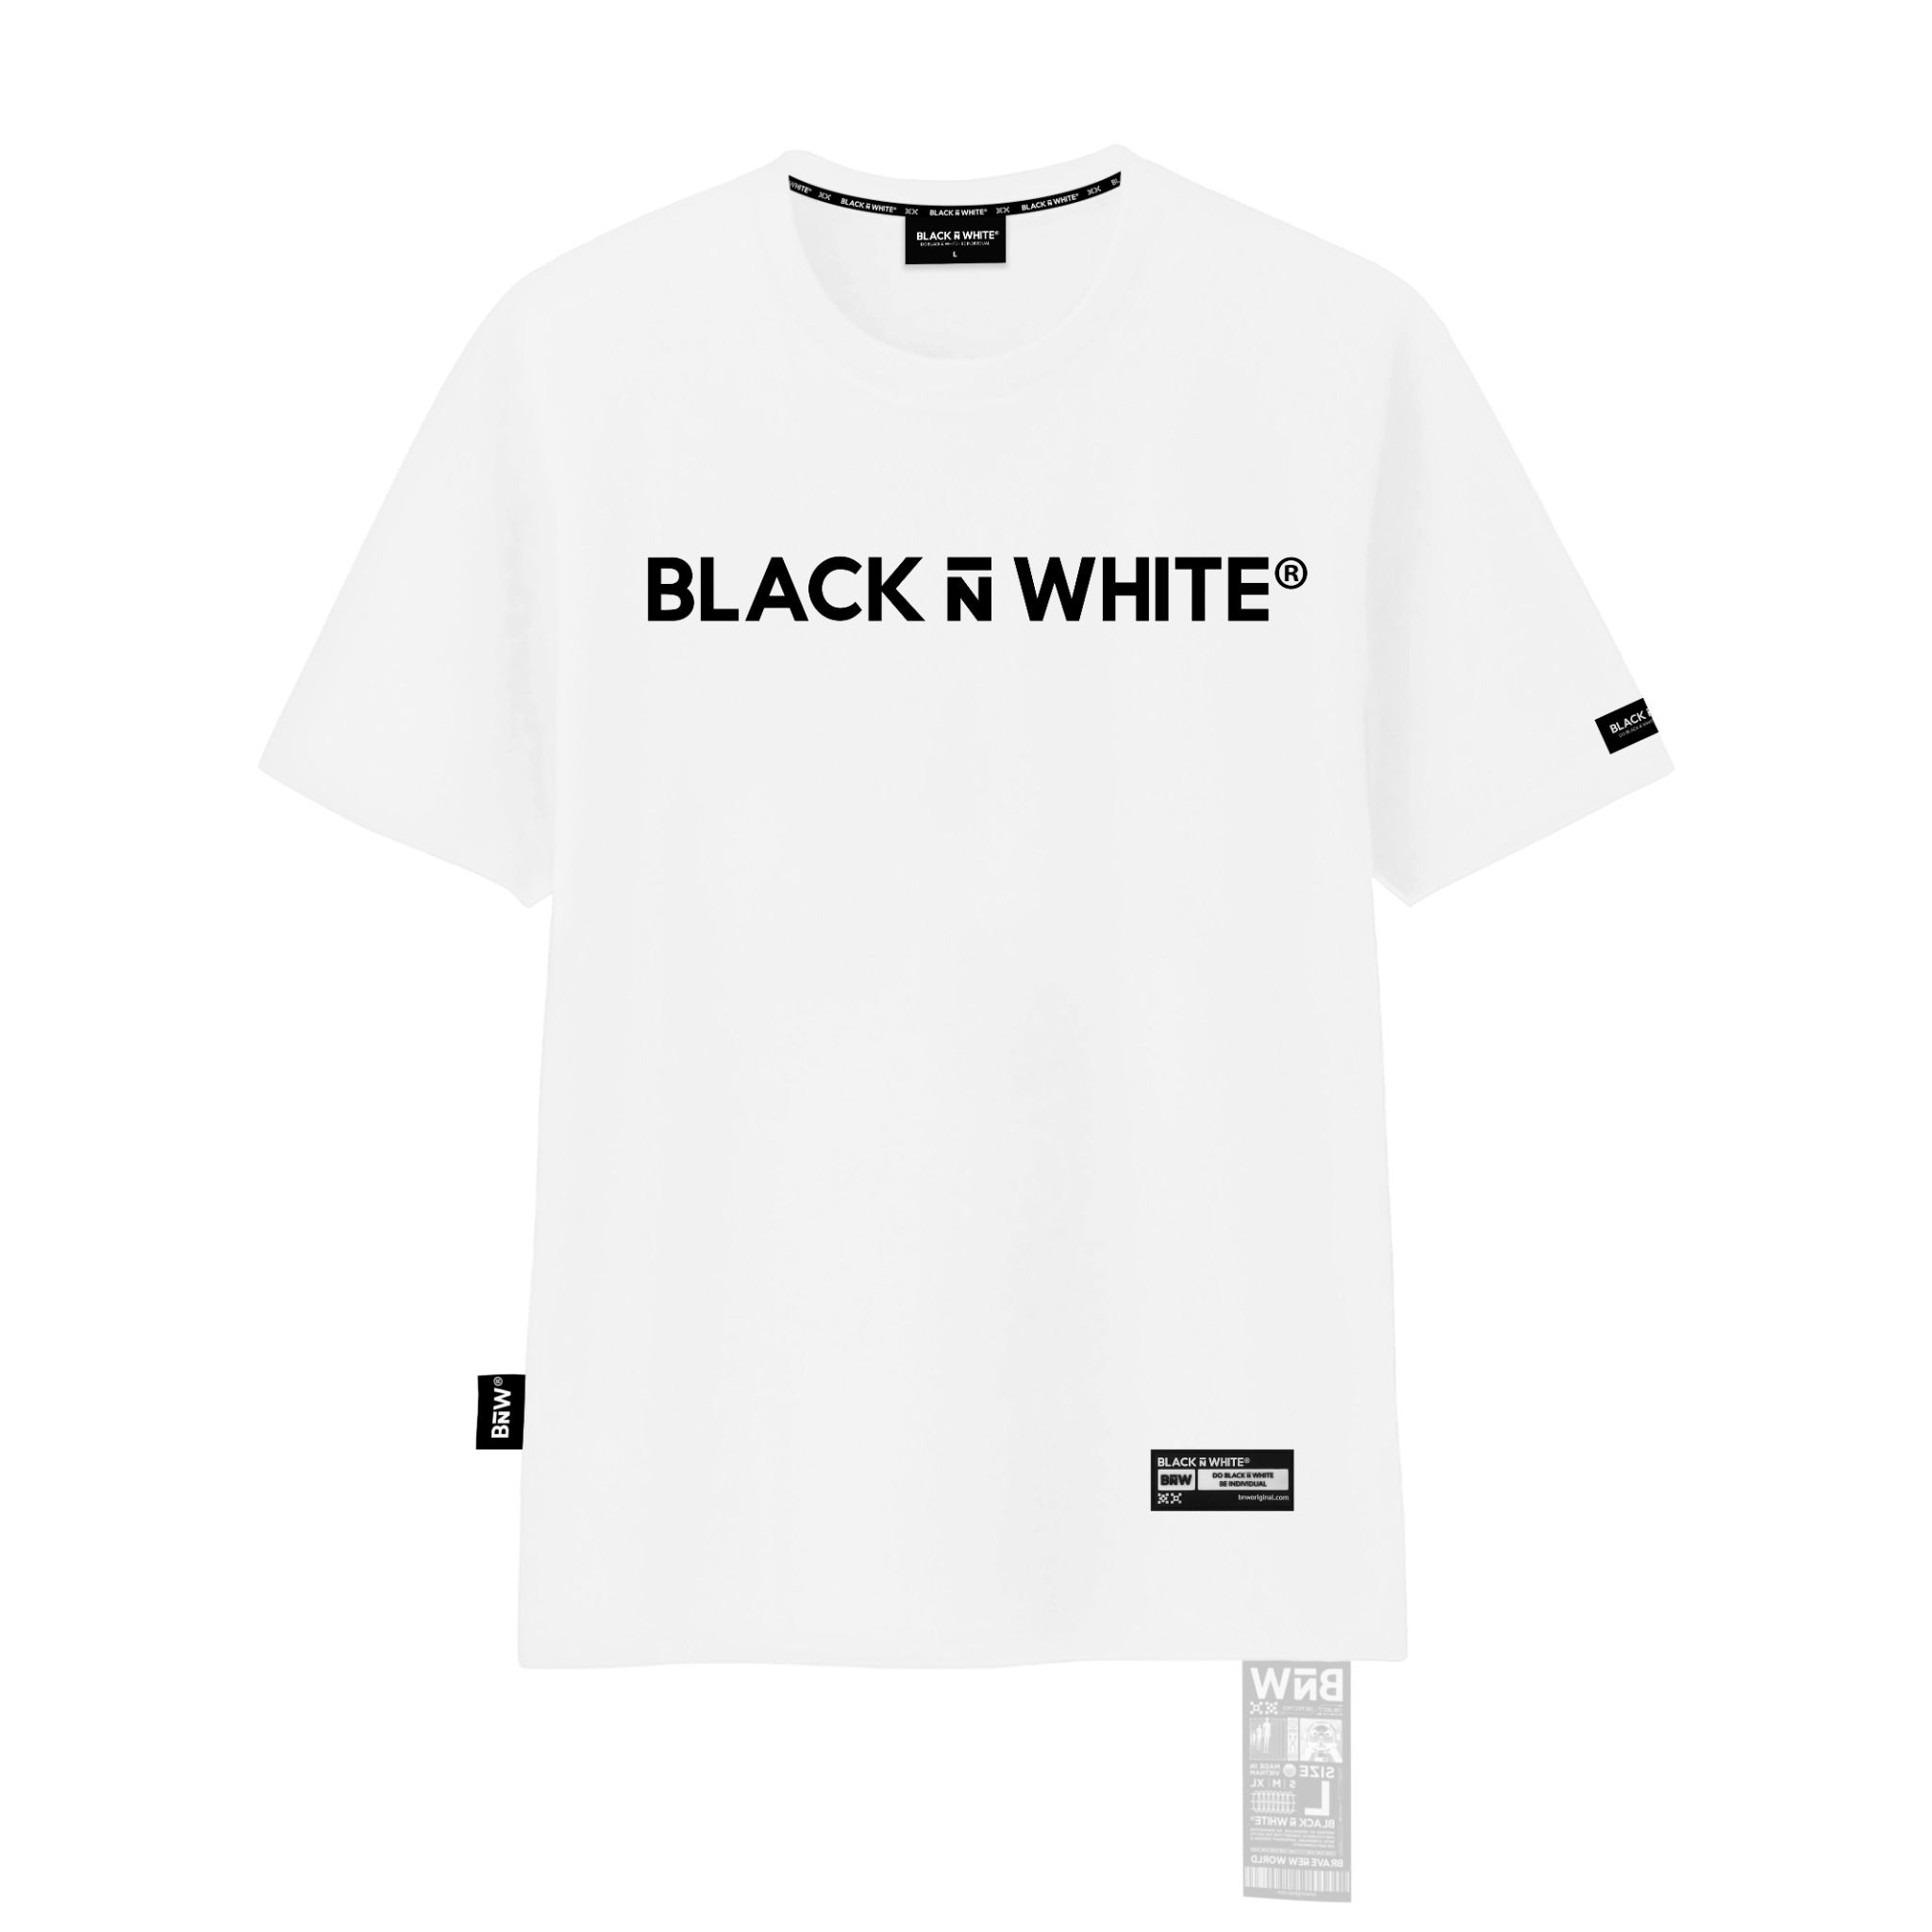 Bɴ̅W® BLACK ɴ̅ WHITE Tee Ver.2022 – BLACK ɴ̅ WHITE®